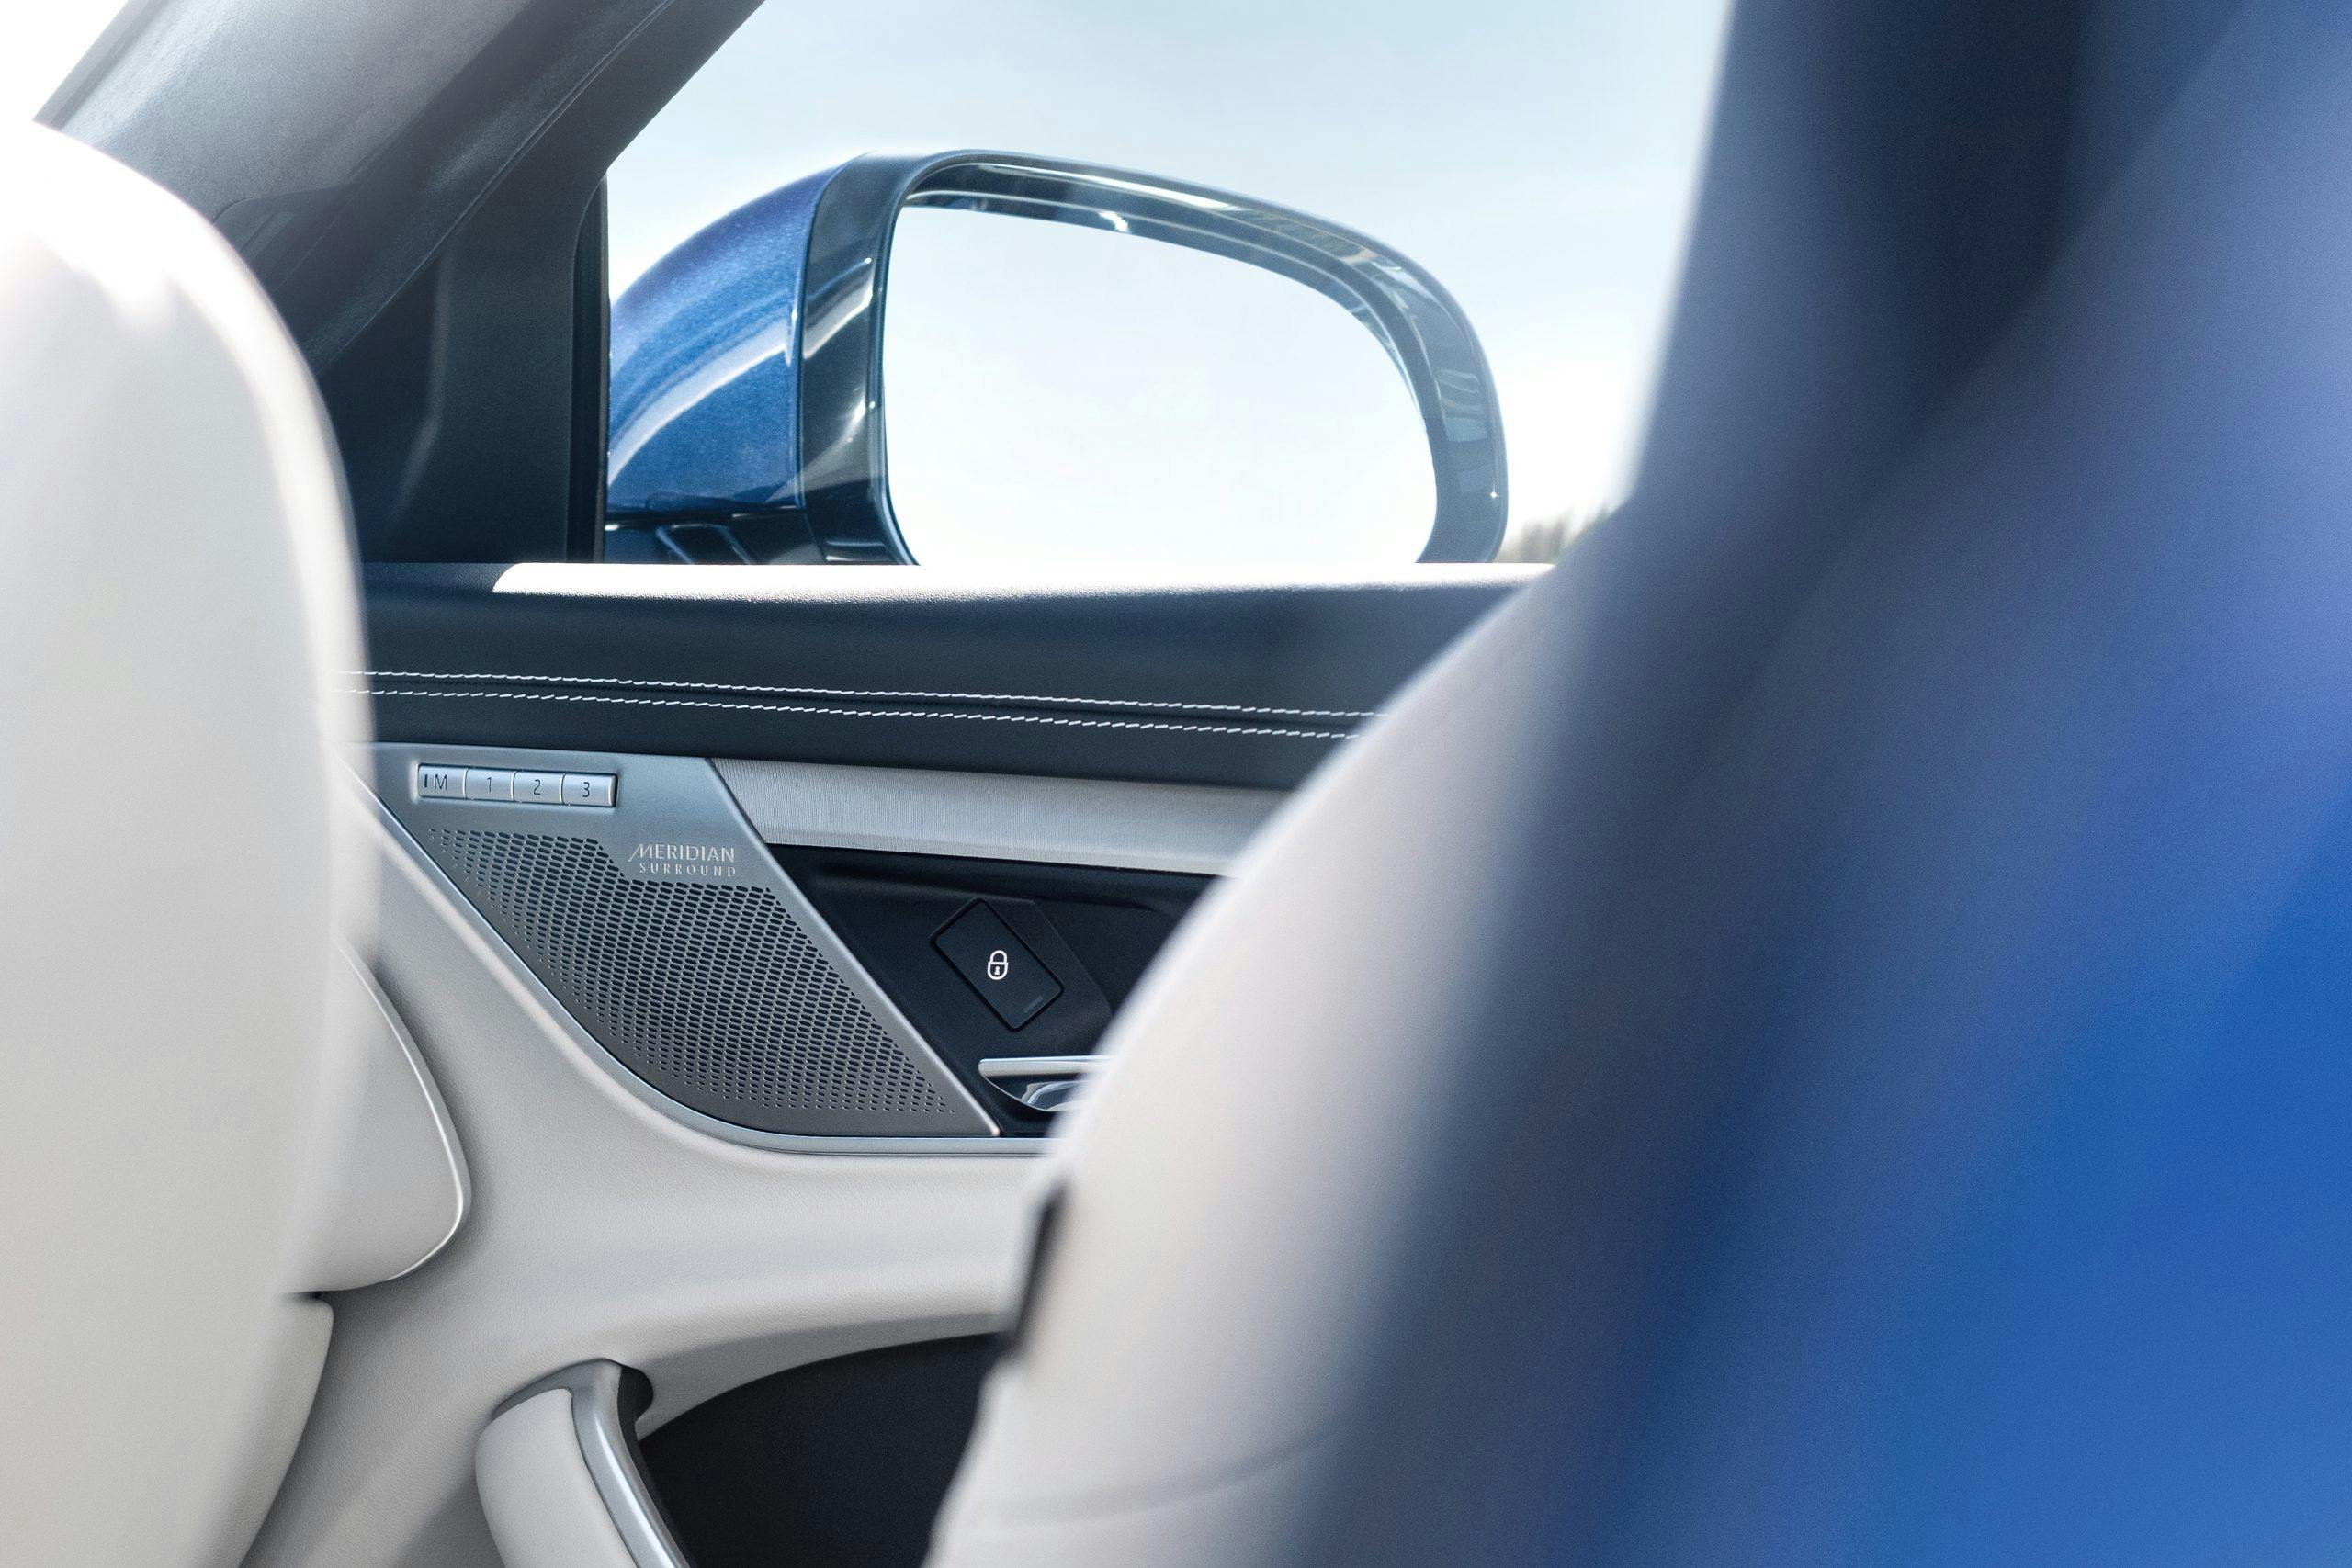 2021 Jaguar XF interior meridian sound